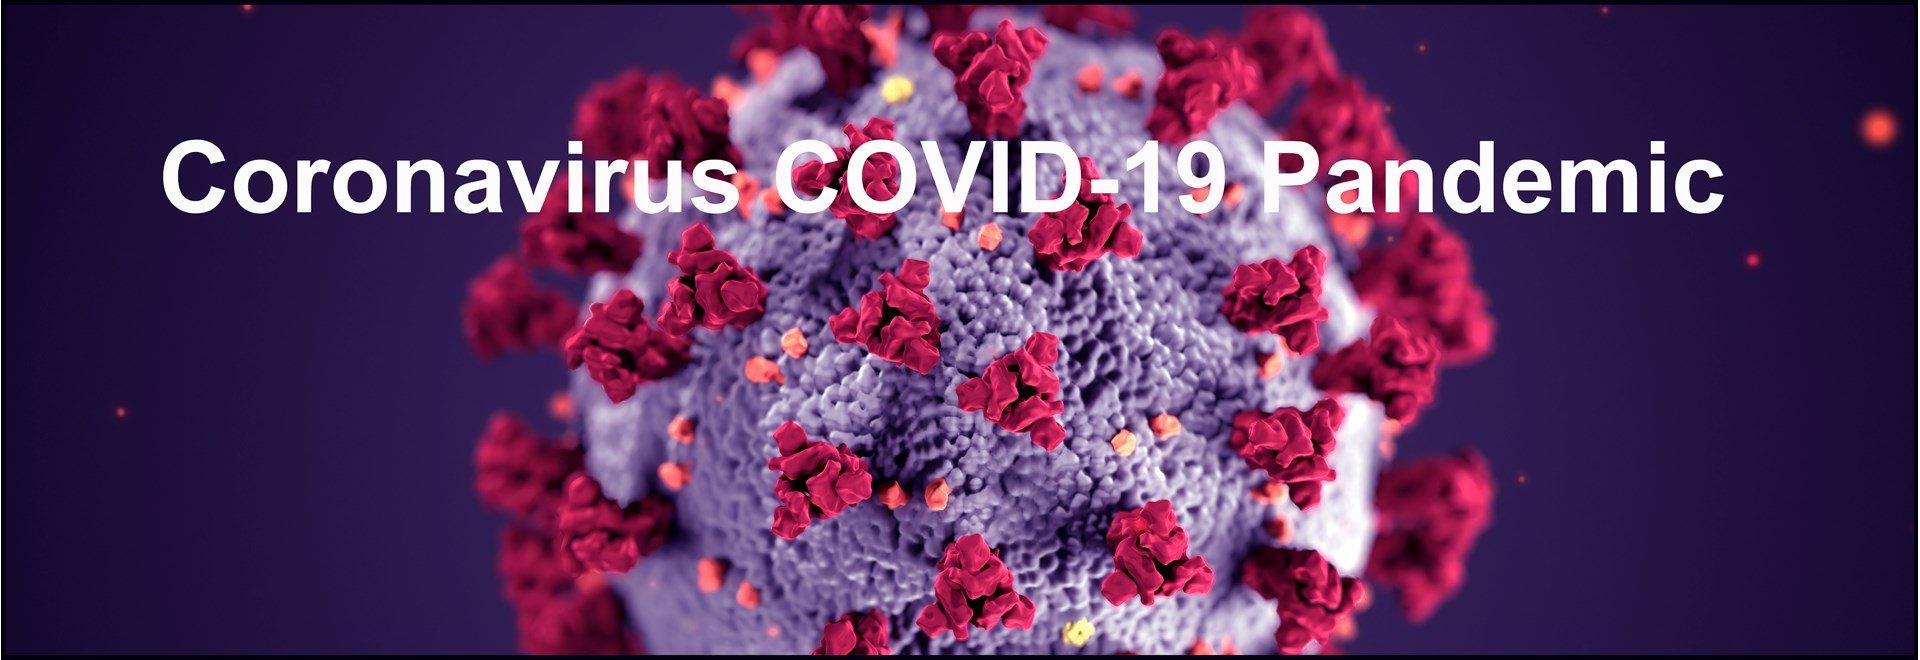 Aston Clinton Parish Council Coronavirus COVID-19